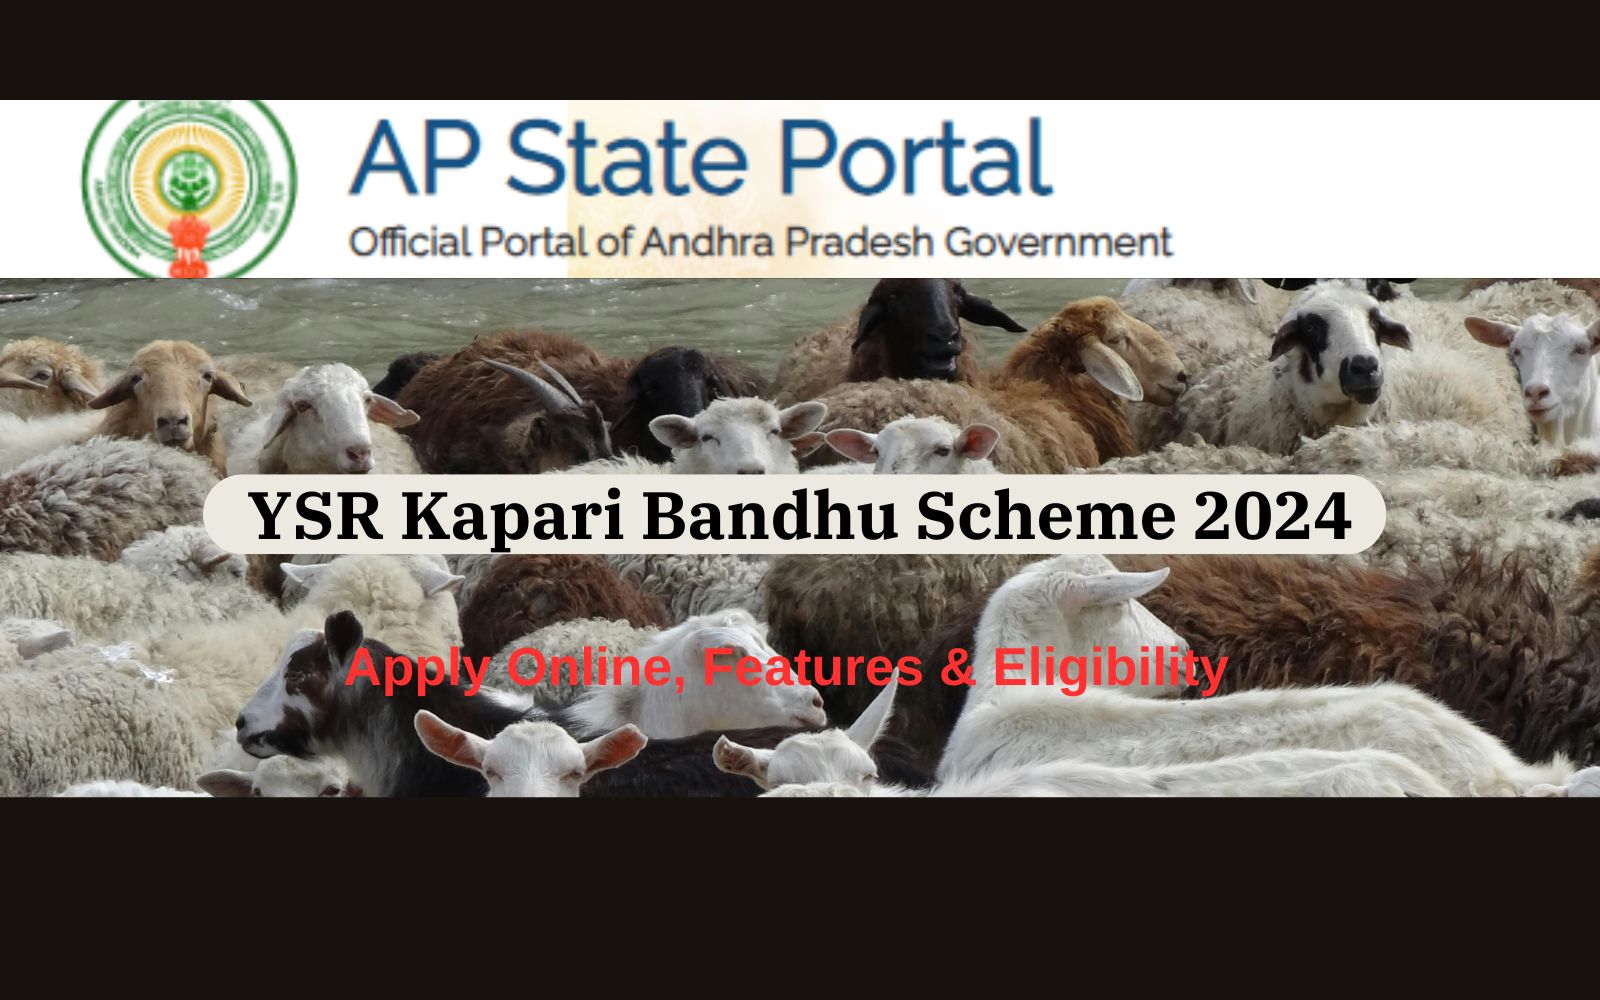 YSR Kapari Bandhu Scheme 2024